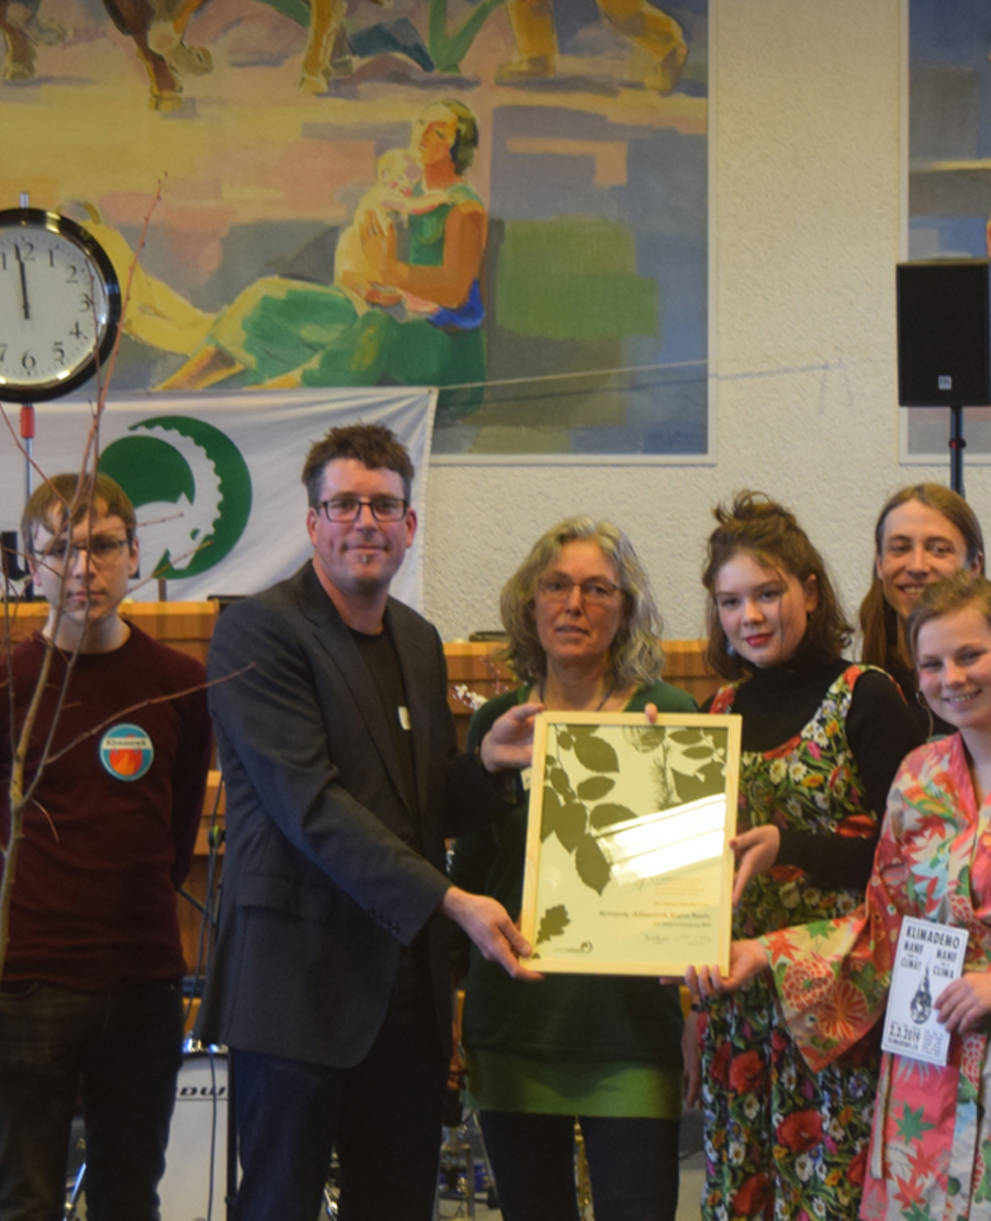 Verleihung Naturschutzpreis 2019 Pro Natura Baselland Copyright Manuel Schoenenberger / Pro Natura Baselland